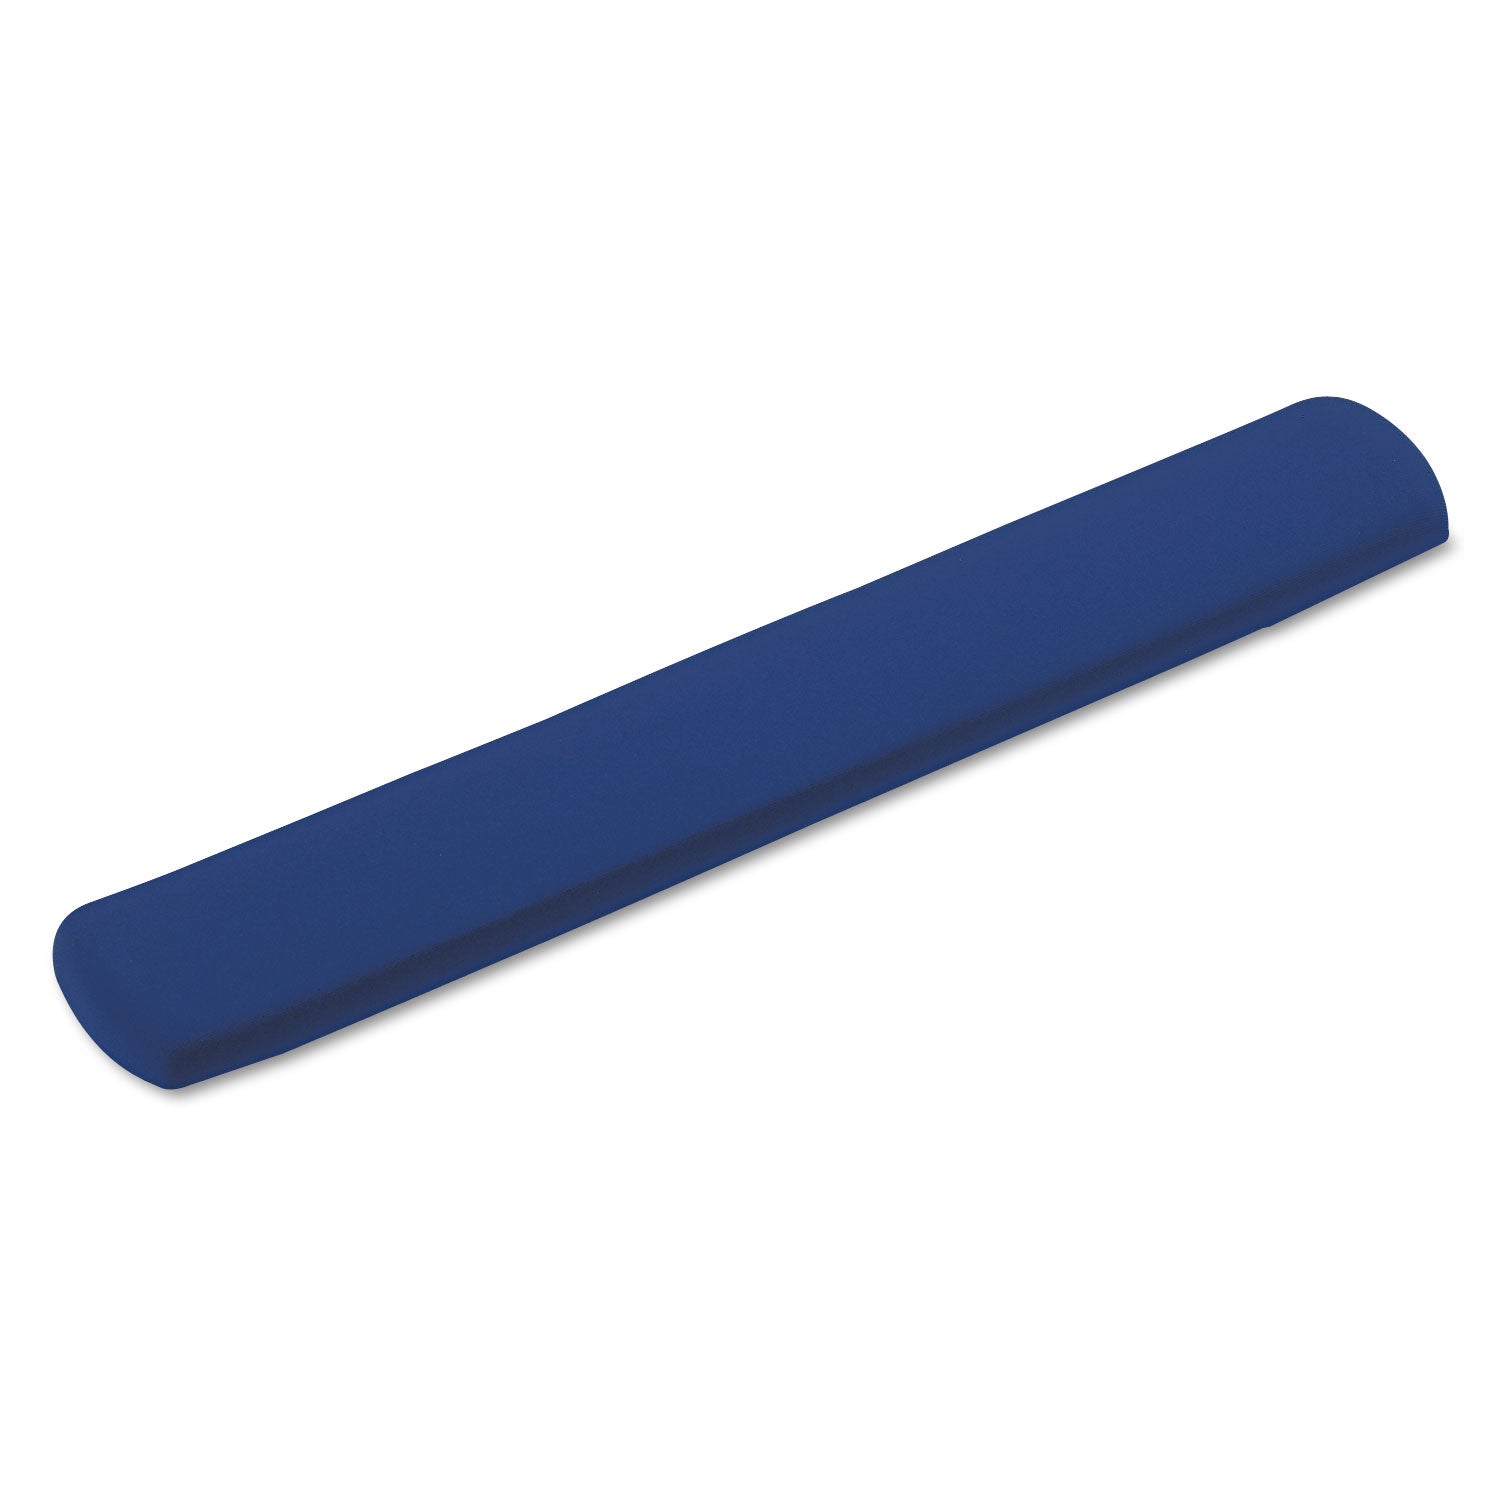 Fabric-Covered Gel Keyboard Wrist Rest, 19 x 2.87, Blue - 